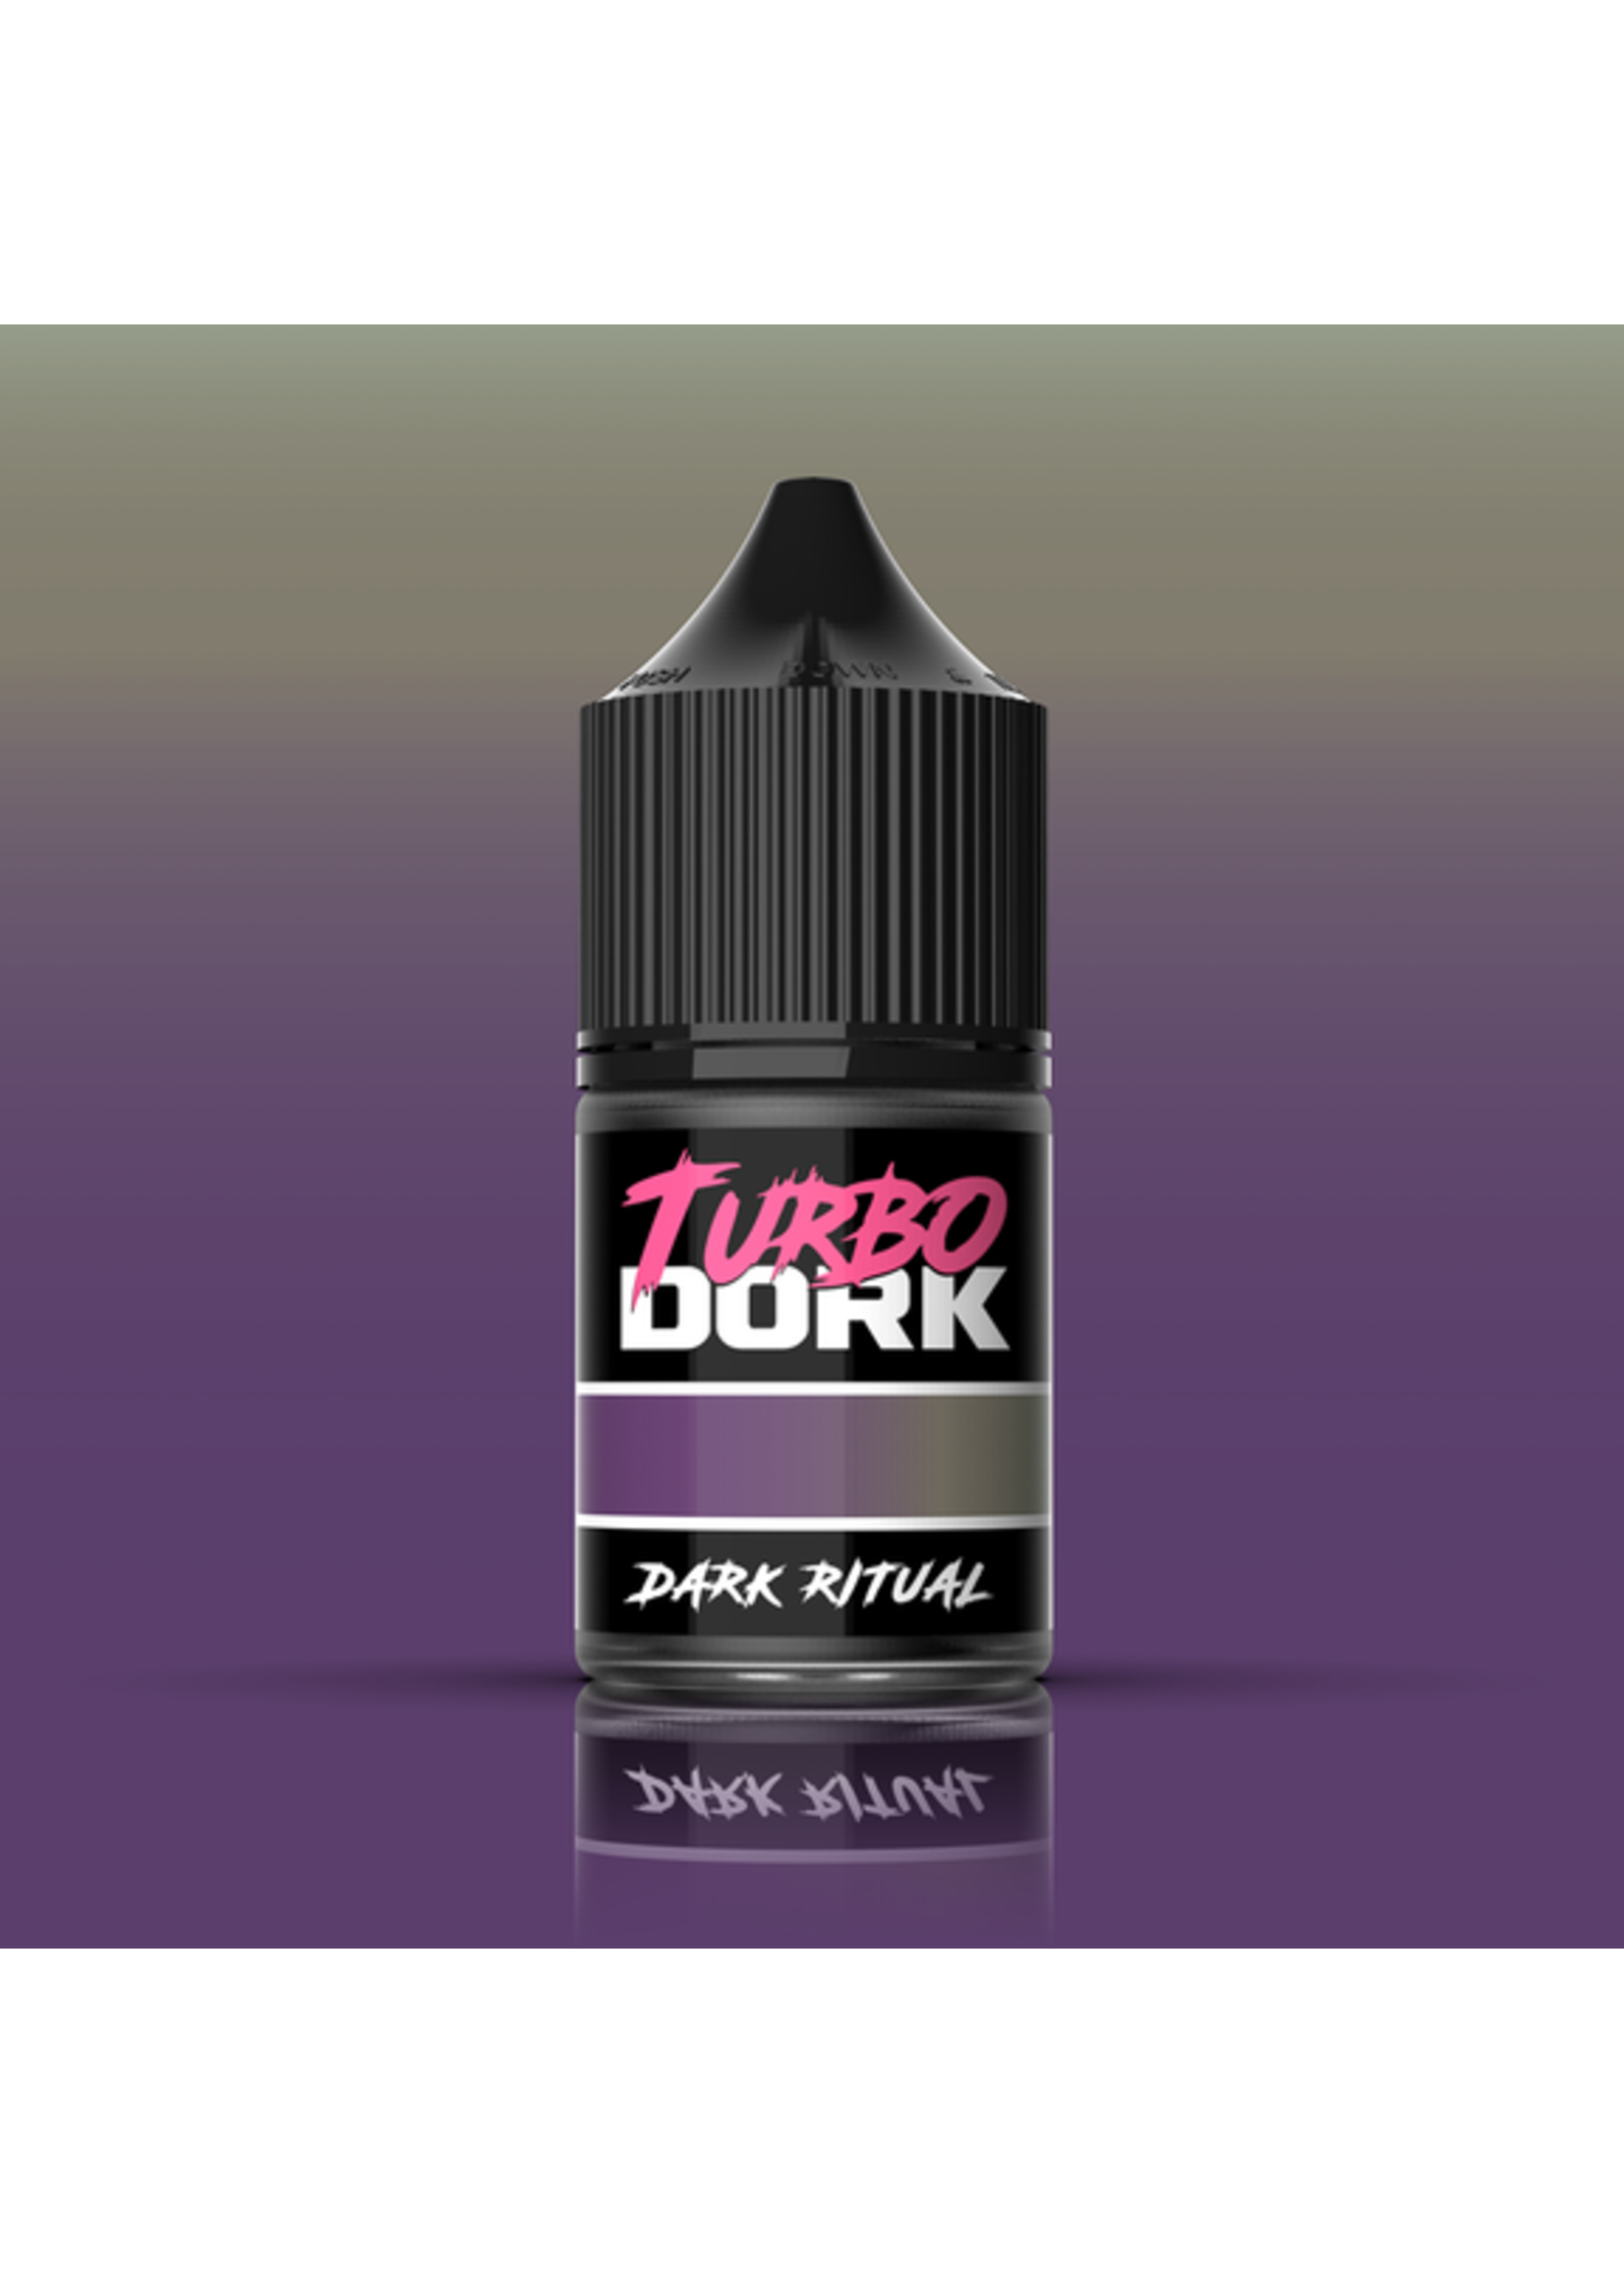 Turbo Dork TDK5274 - Dark Ritual Turboshift Paint (22ml)